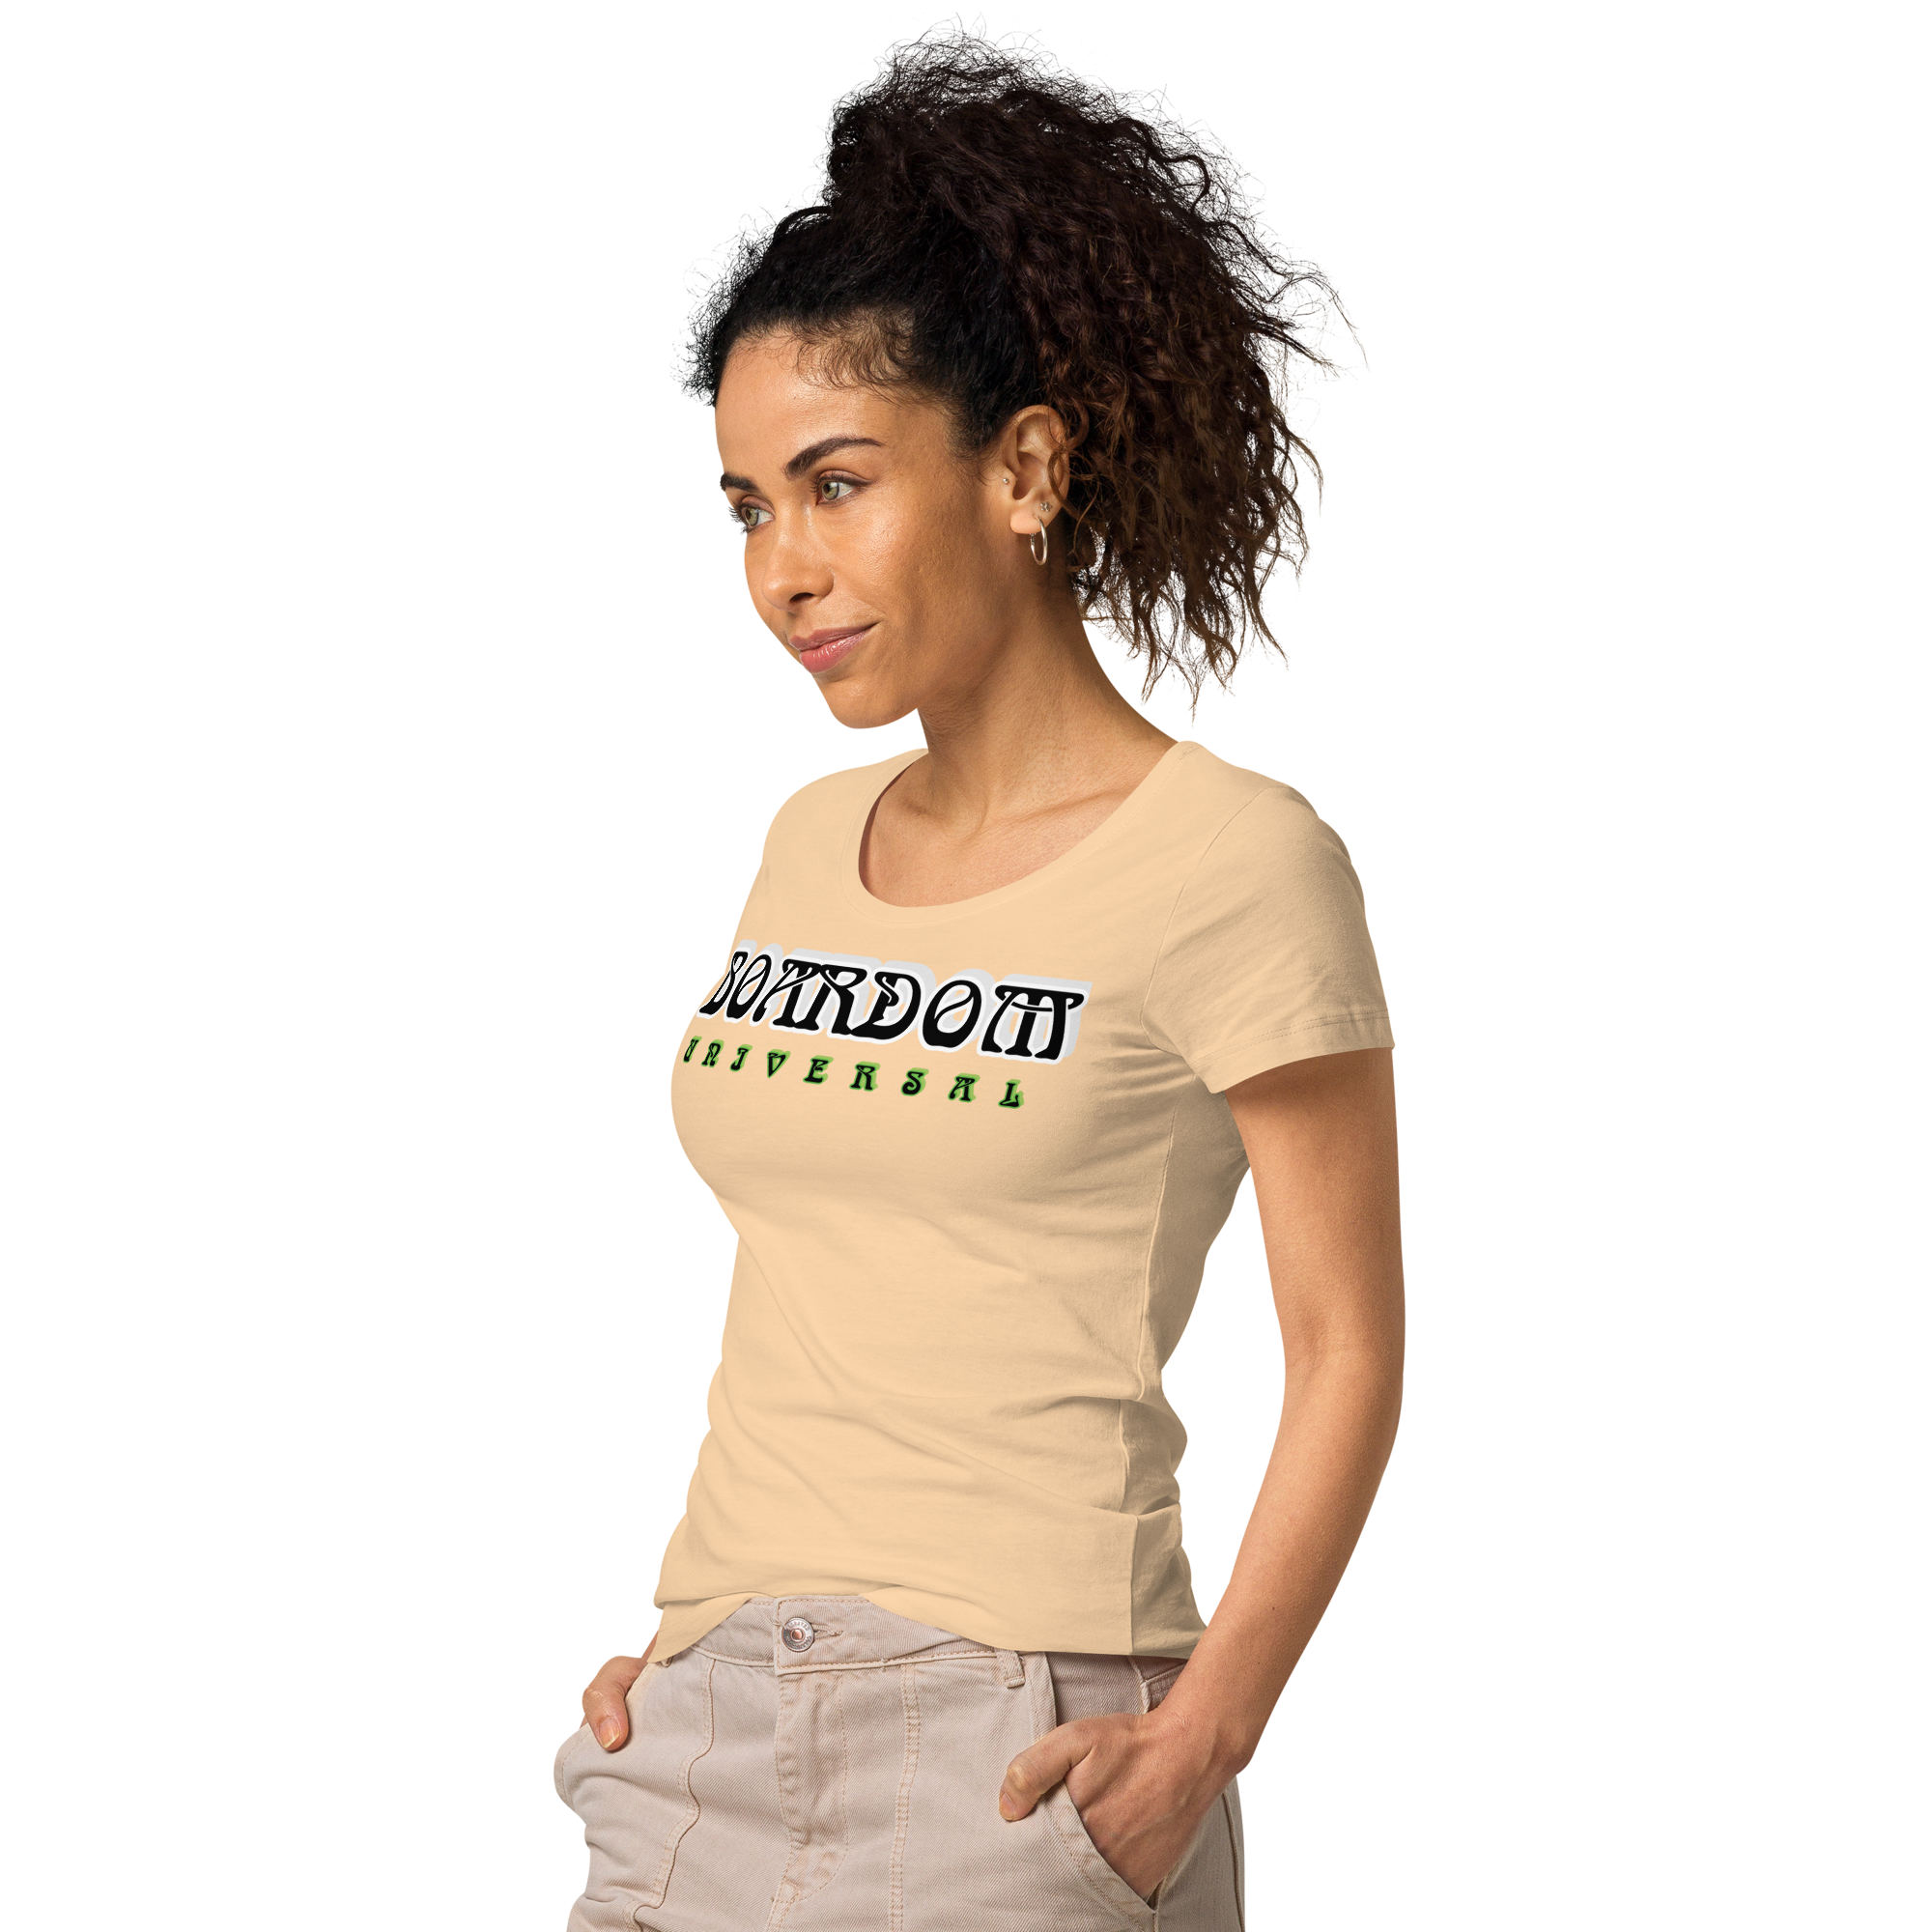 Boardom Universal Women’s basic organic t-shirt